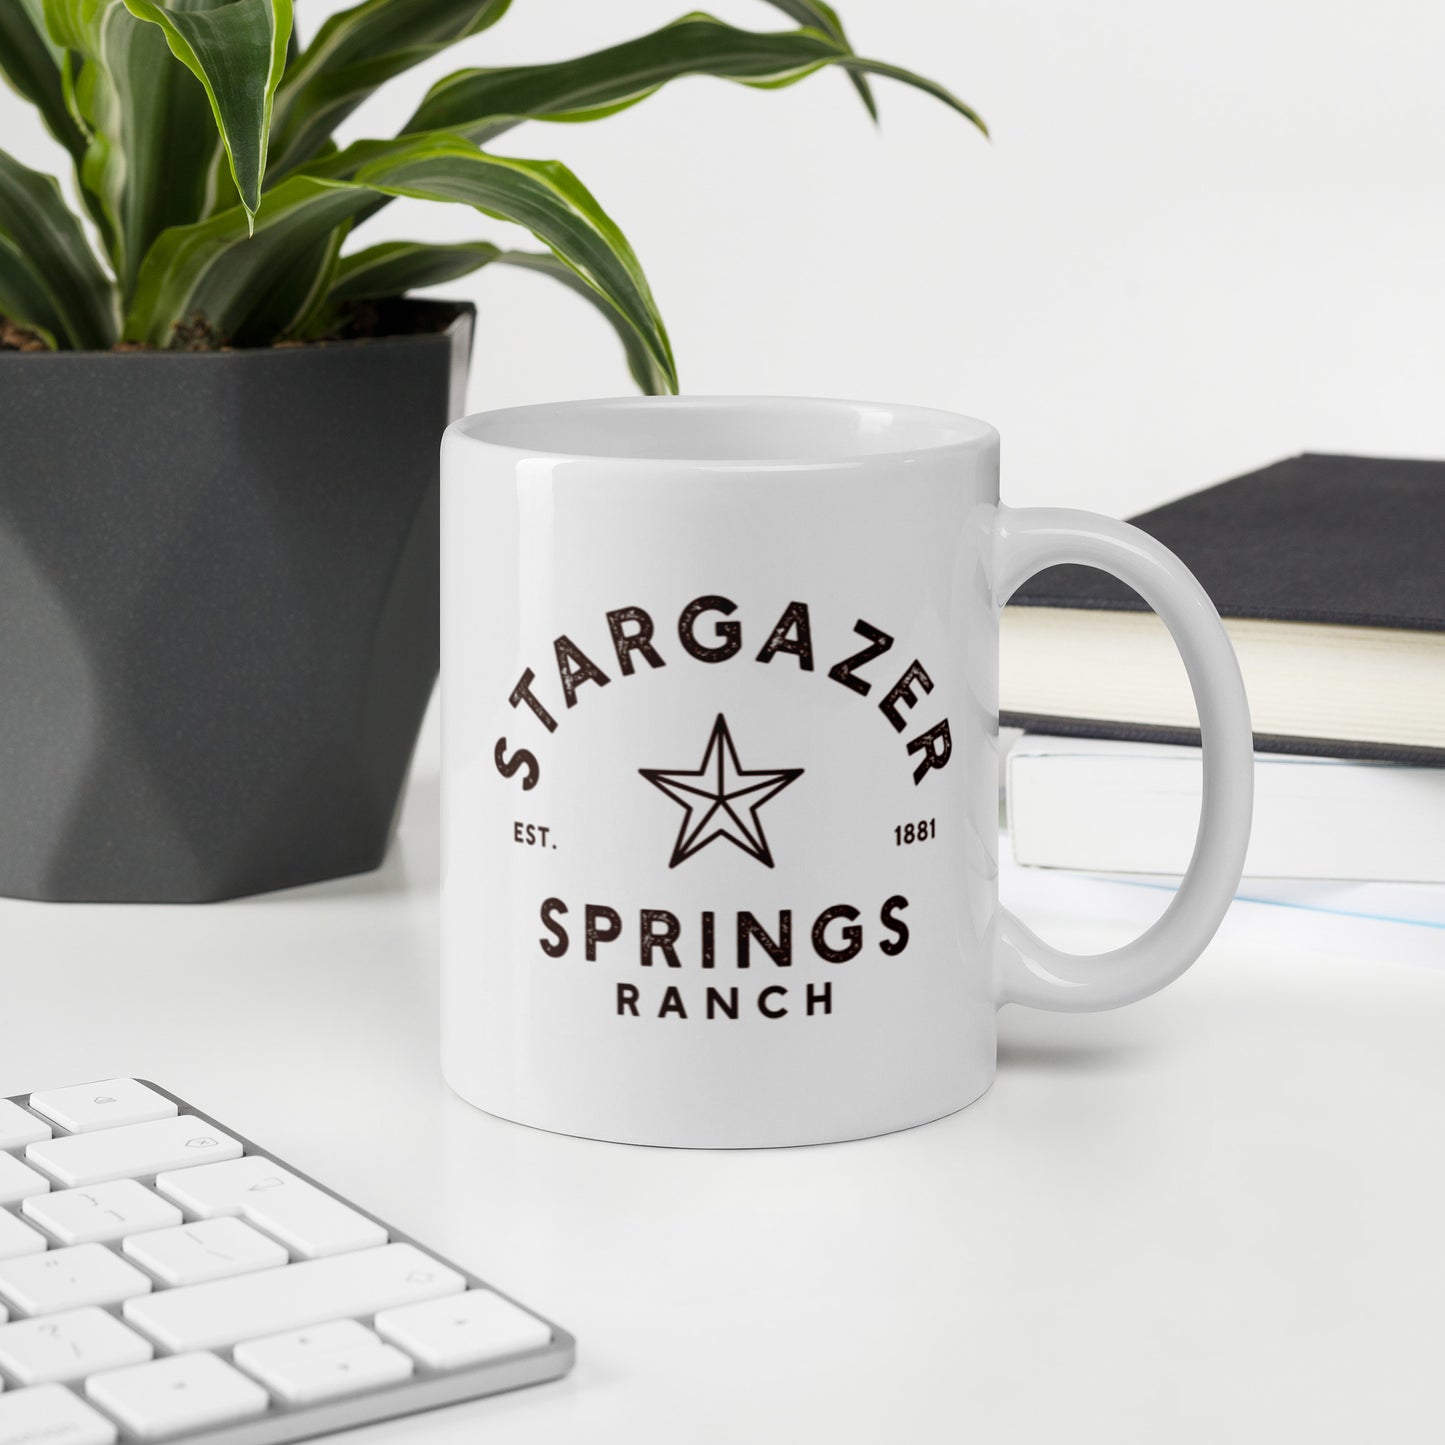 Stargazer Springs Ranch Mug